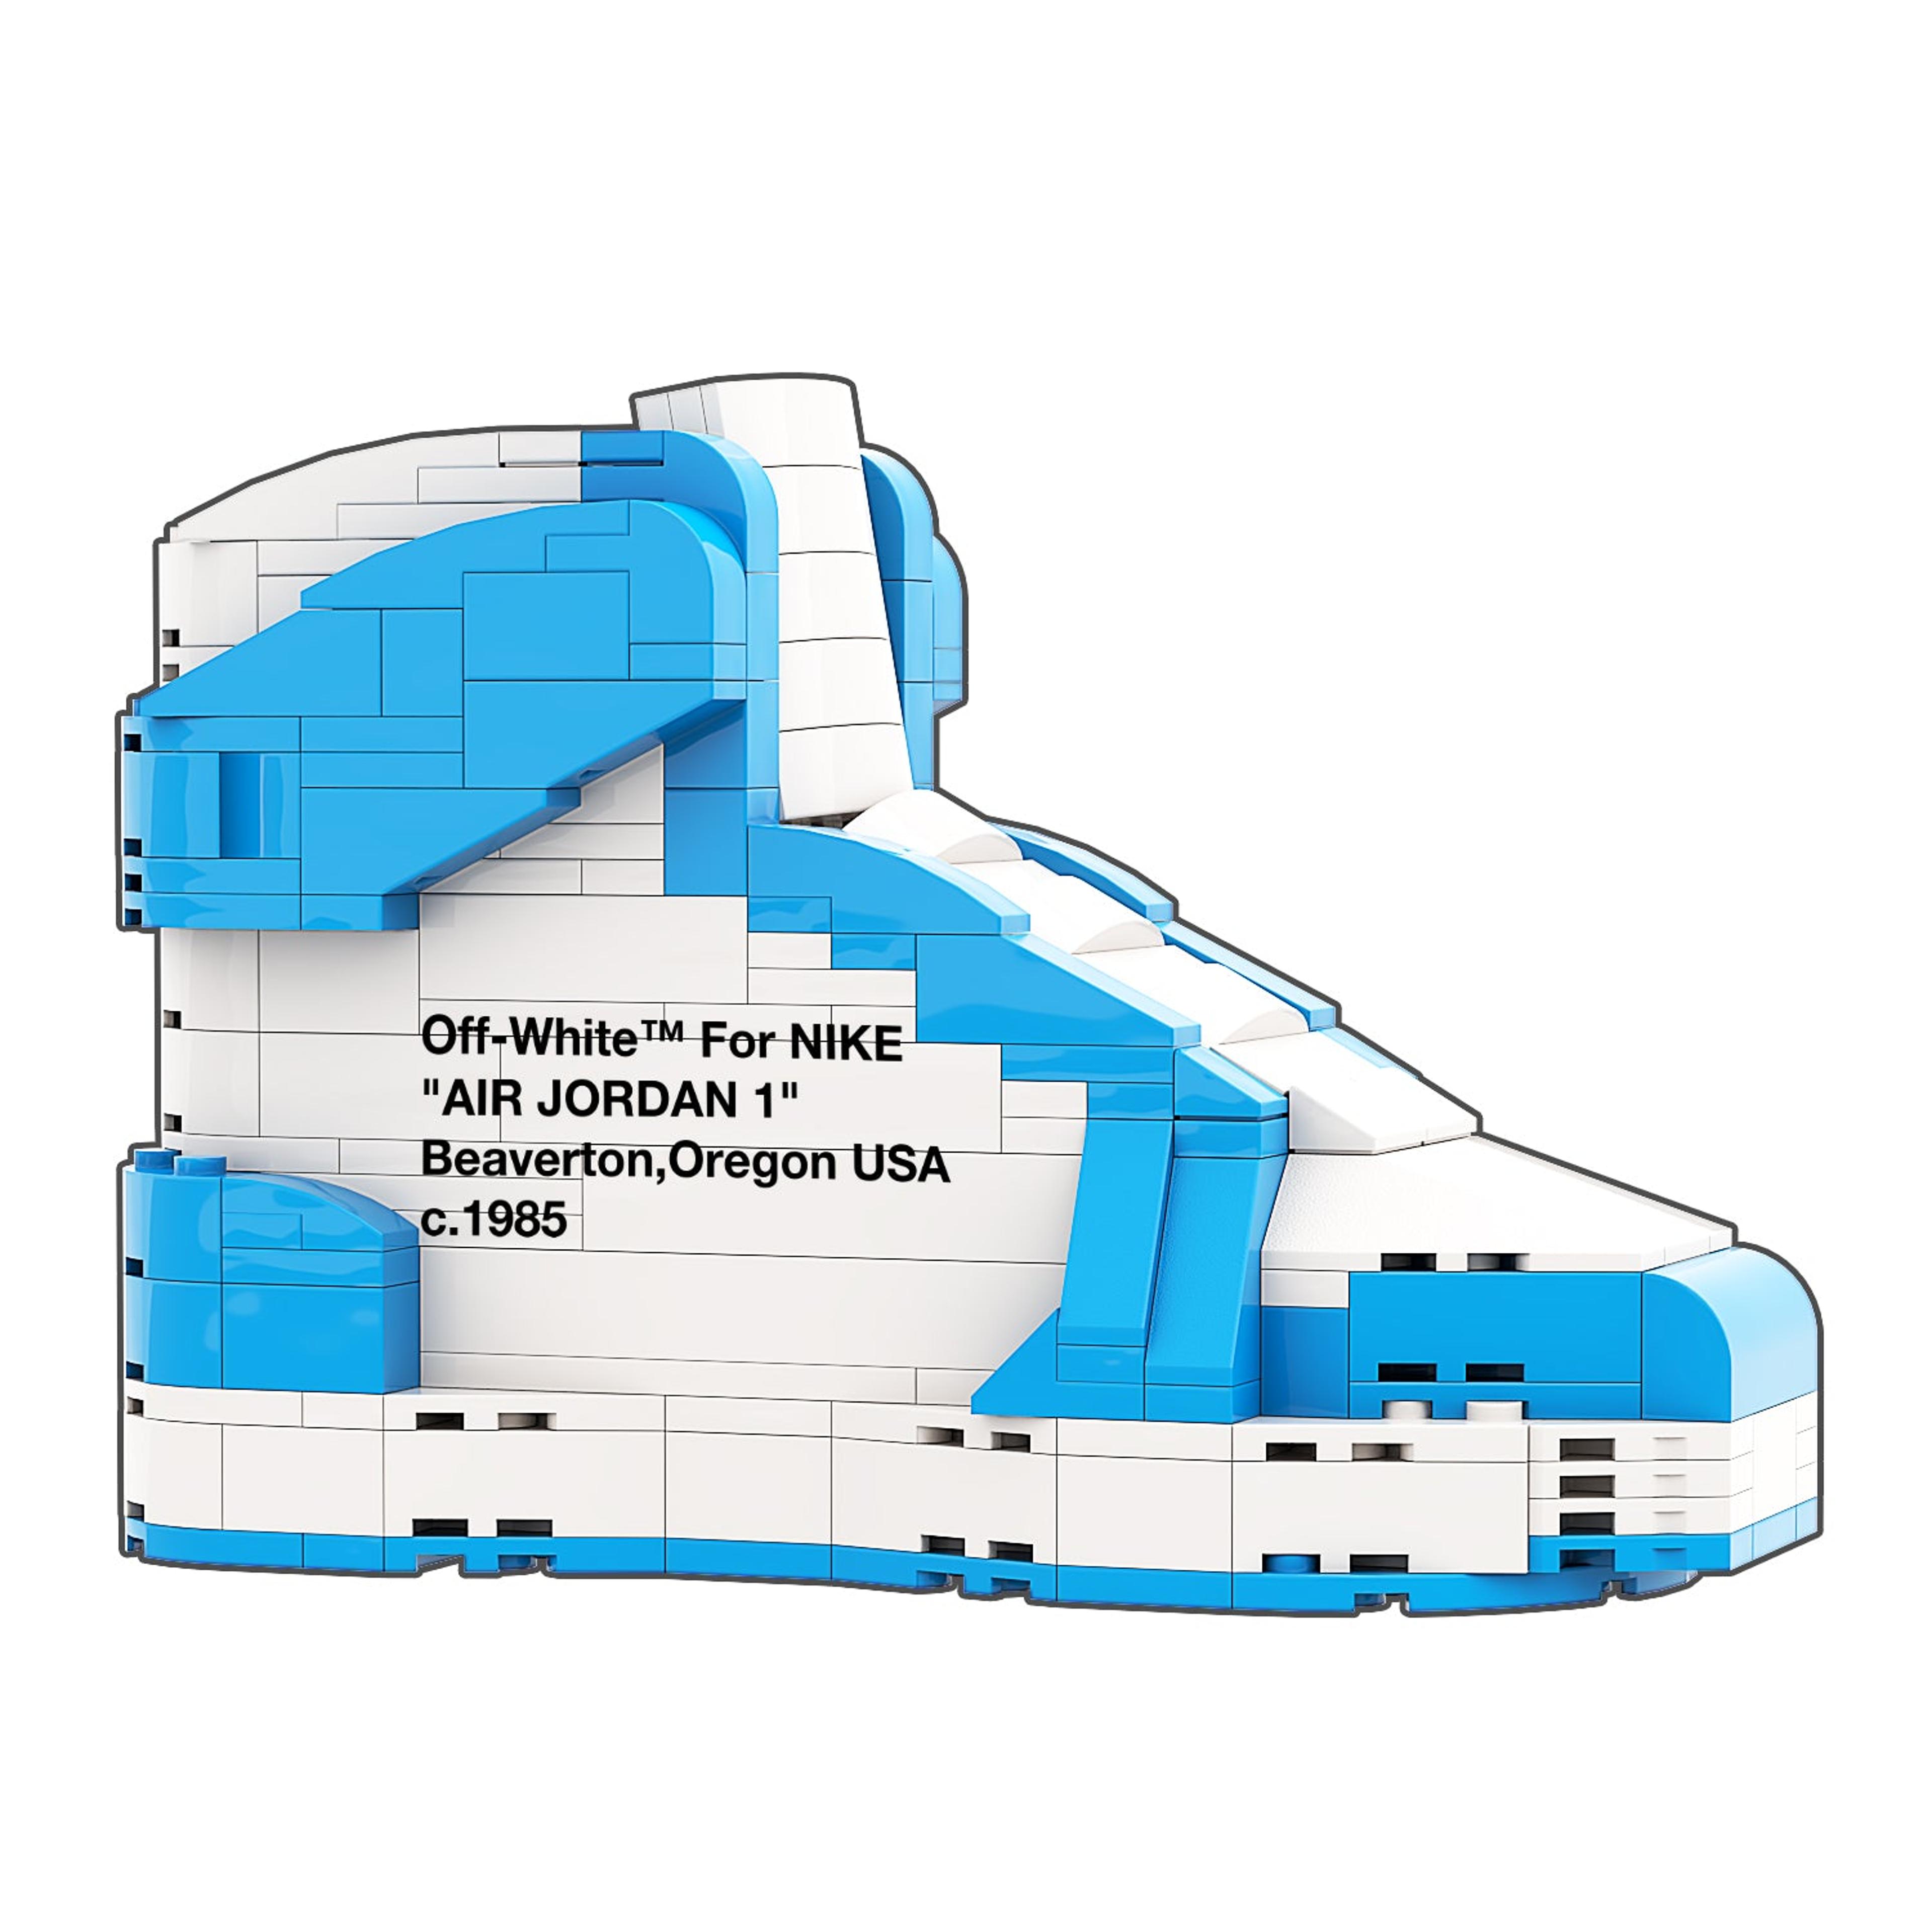 Alternate View 5 of REGULAR "AJ1 Off-White UNC" Sneaker Bricks with Mini Figure